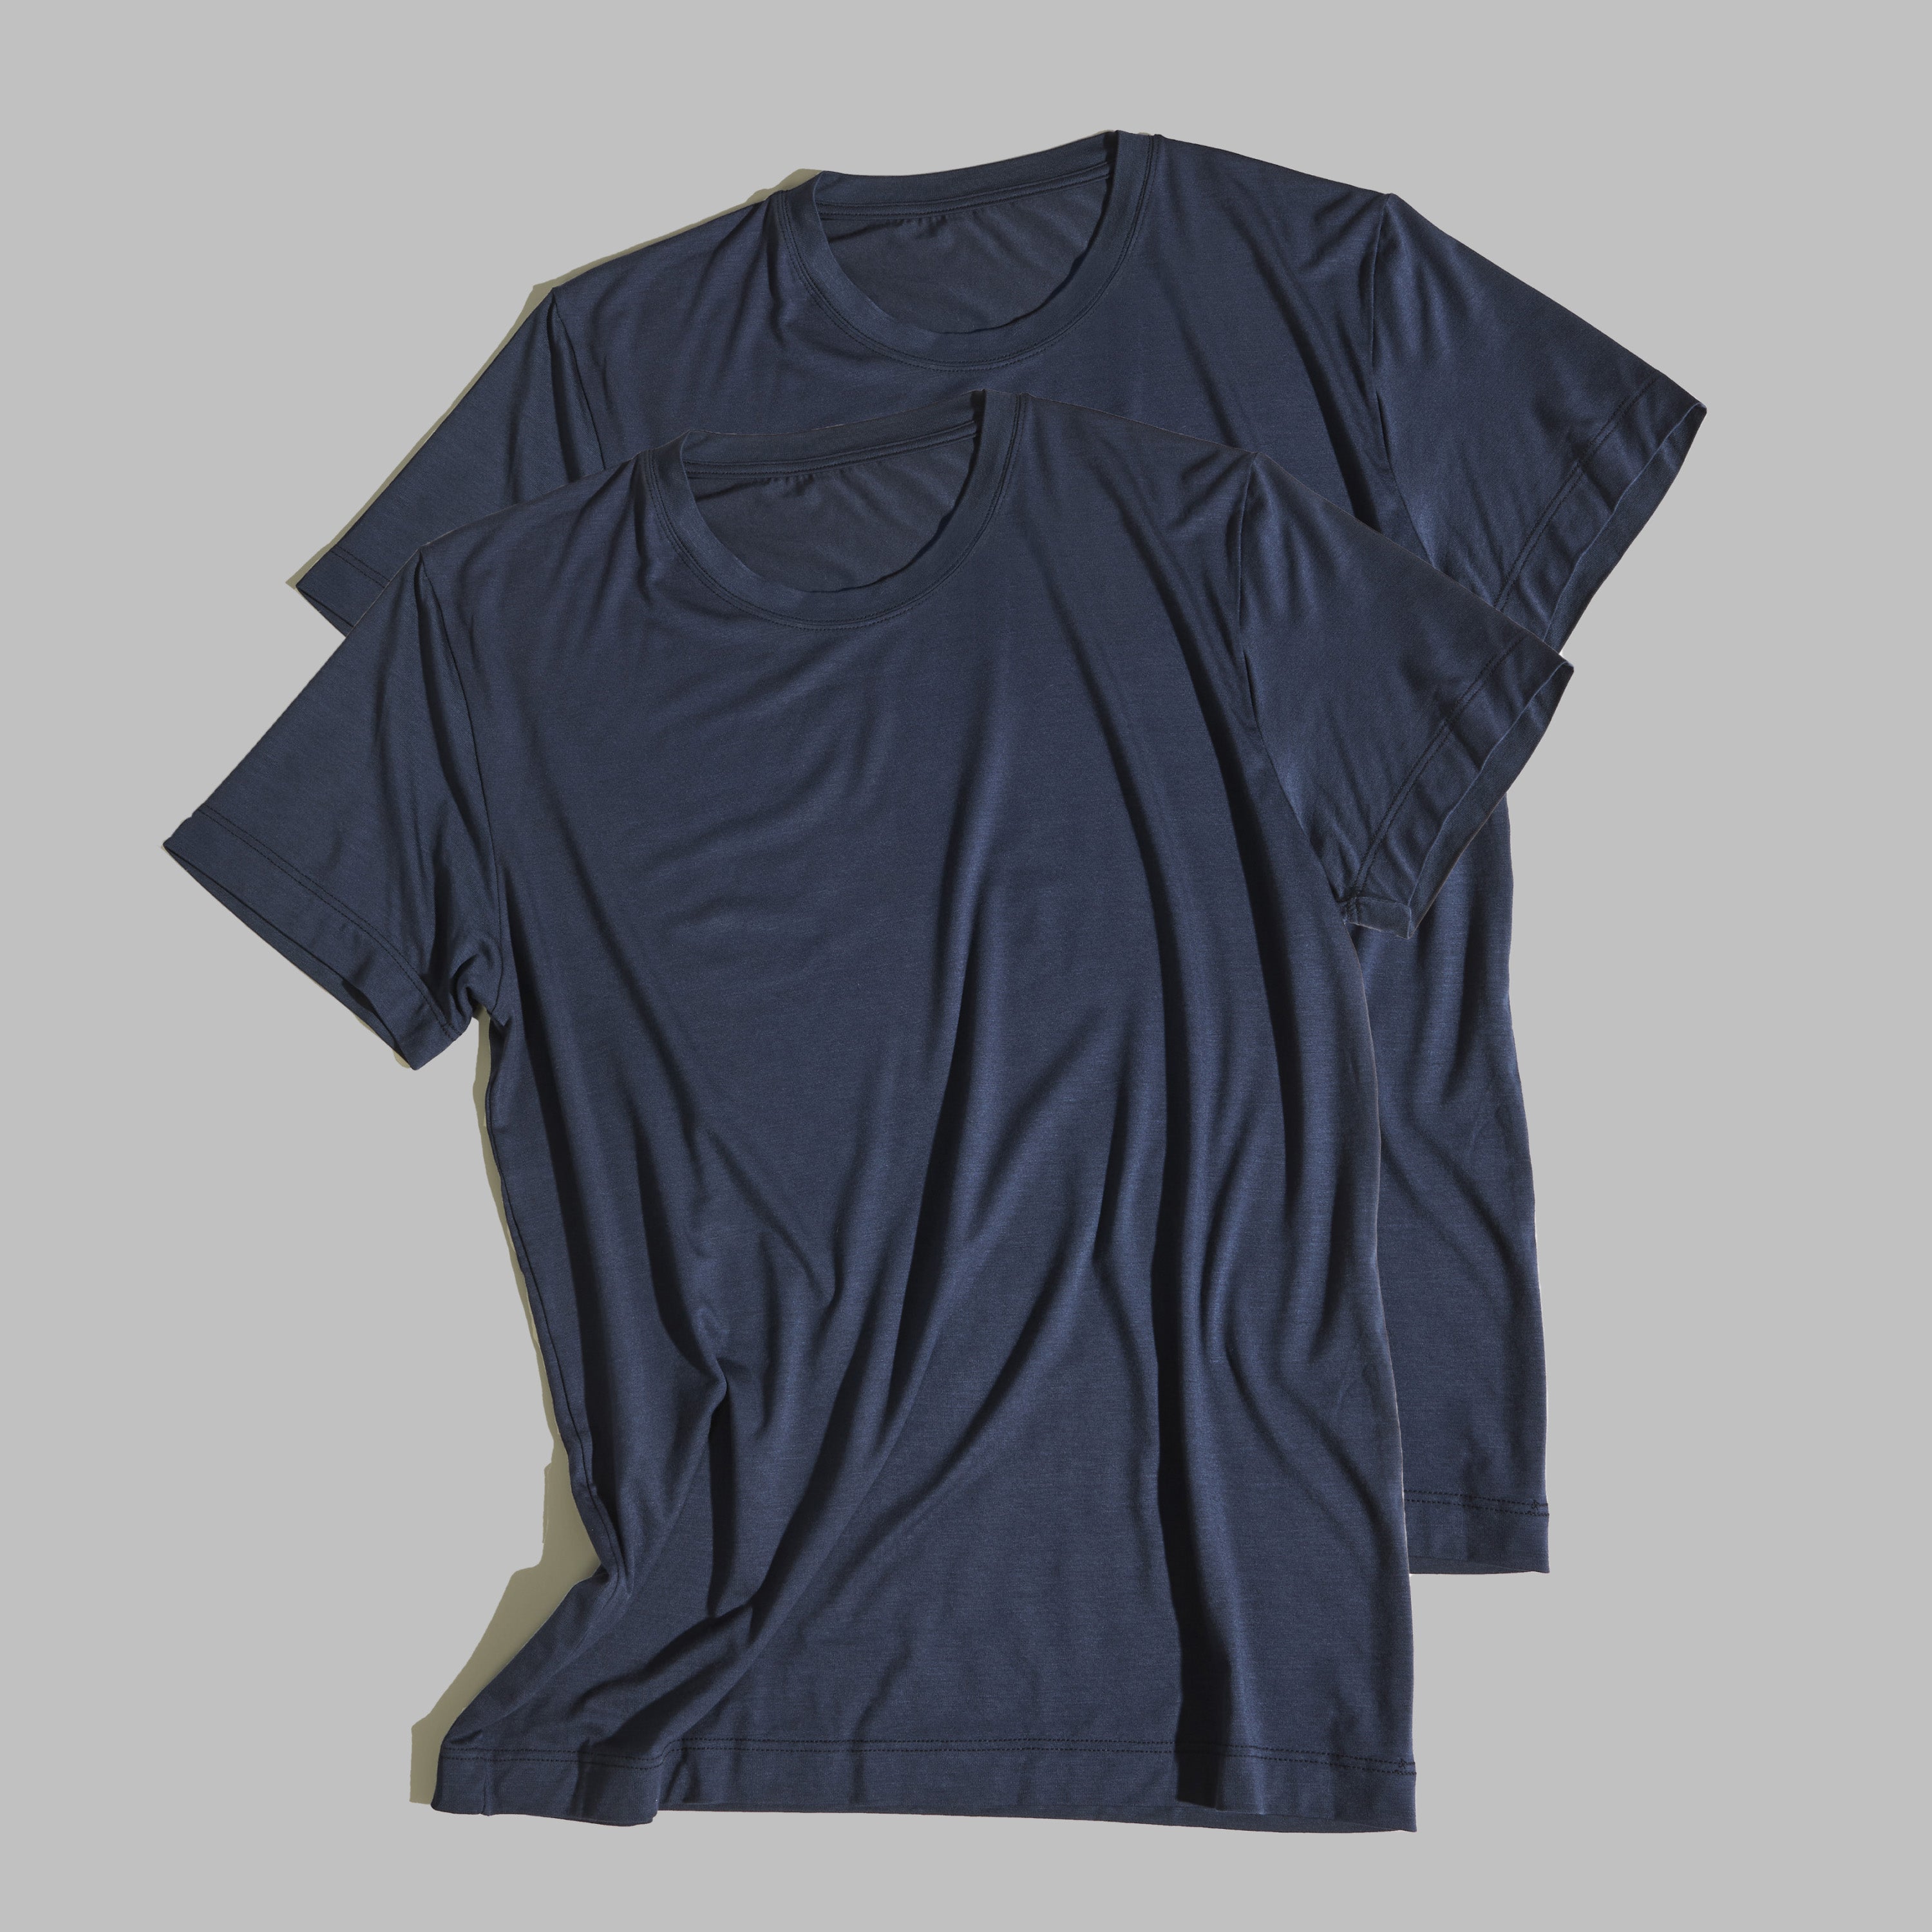 2 x T-shirt Blu Navy